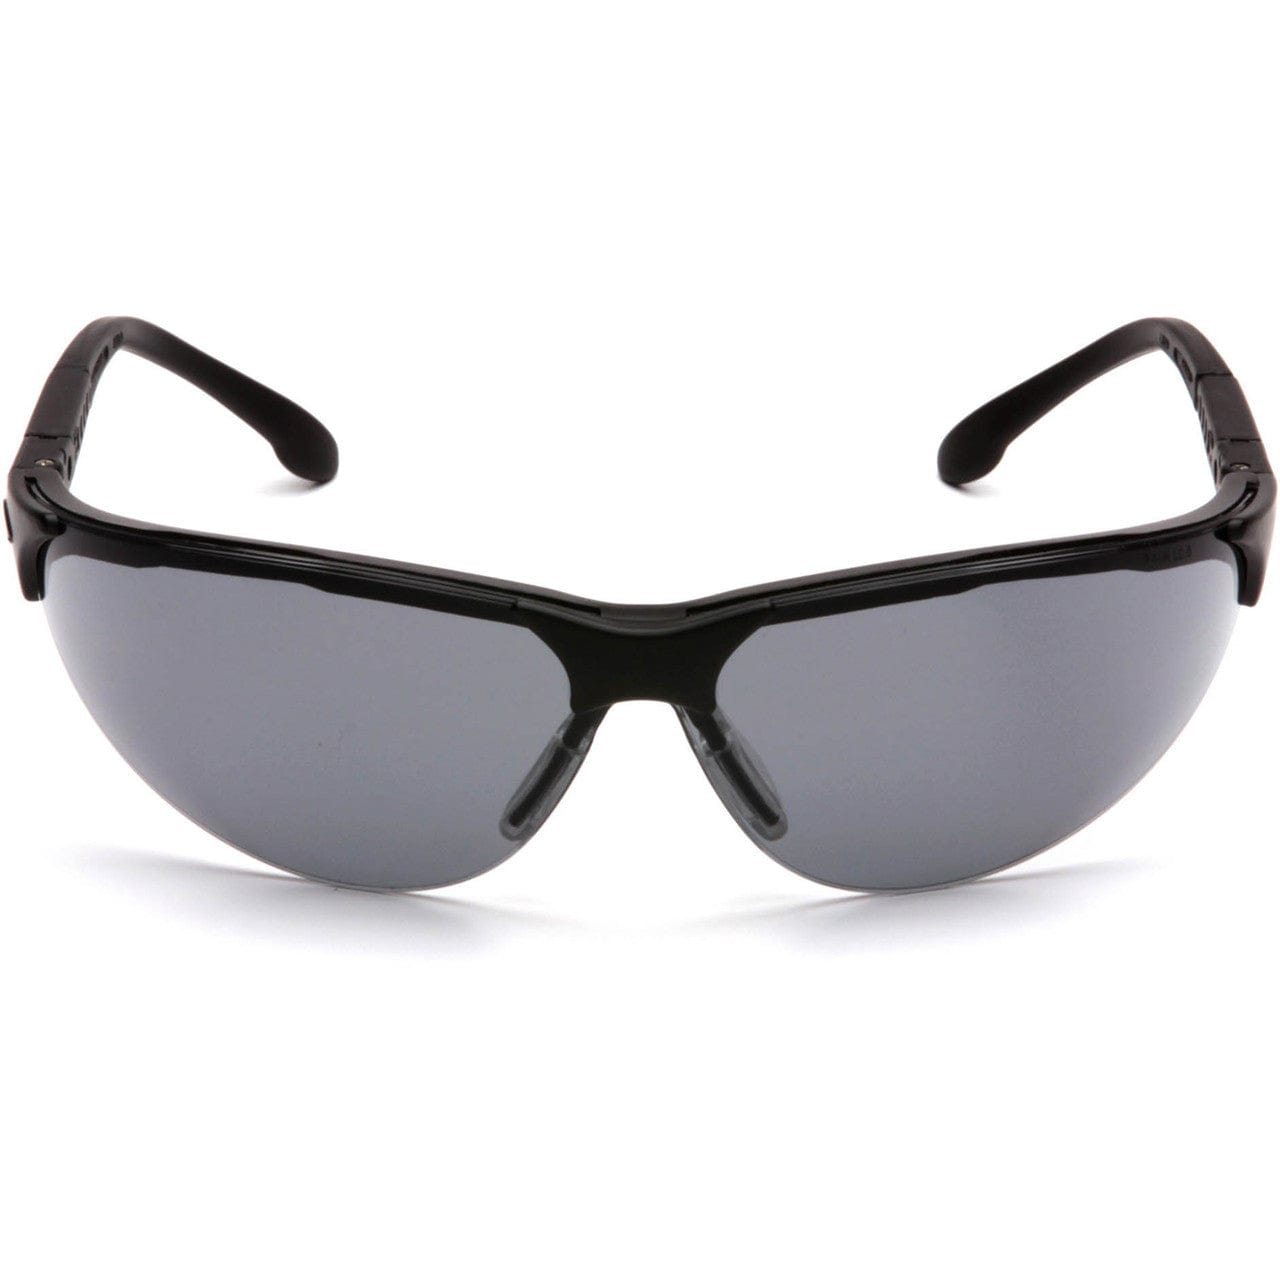 Pyramex Rendezvous Safety Glasses Black Frame Gray Lens SB2820S Front